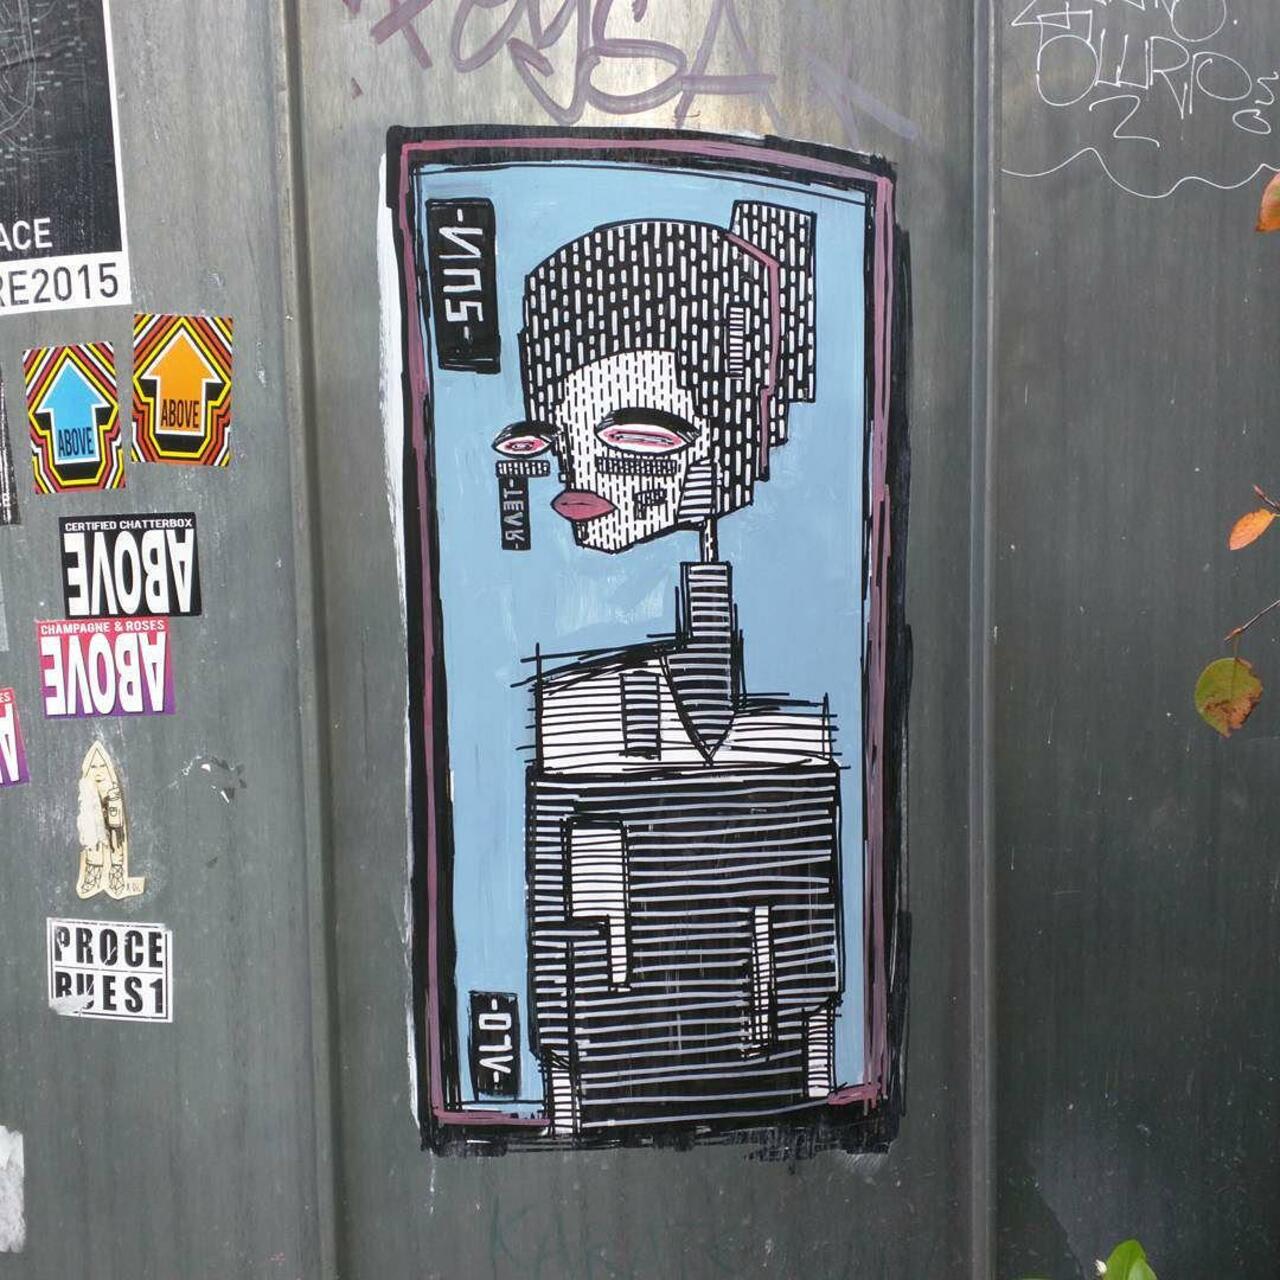 #Paris #graffiti photo by @alphaquadra http://ift.tt/1MeQuxX #StreetArt http://t.co/CJOUKuvGH4